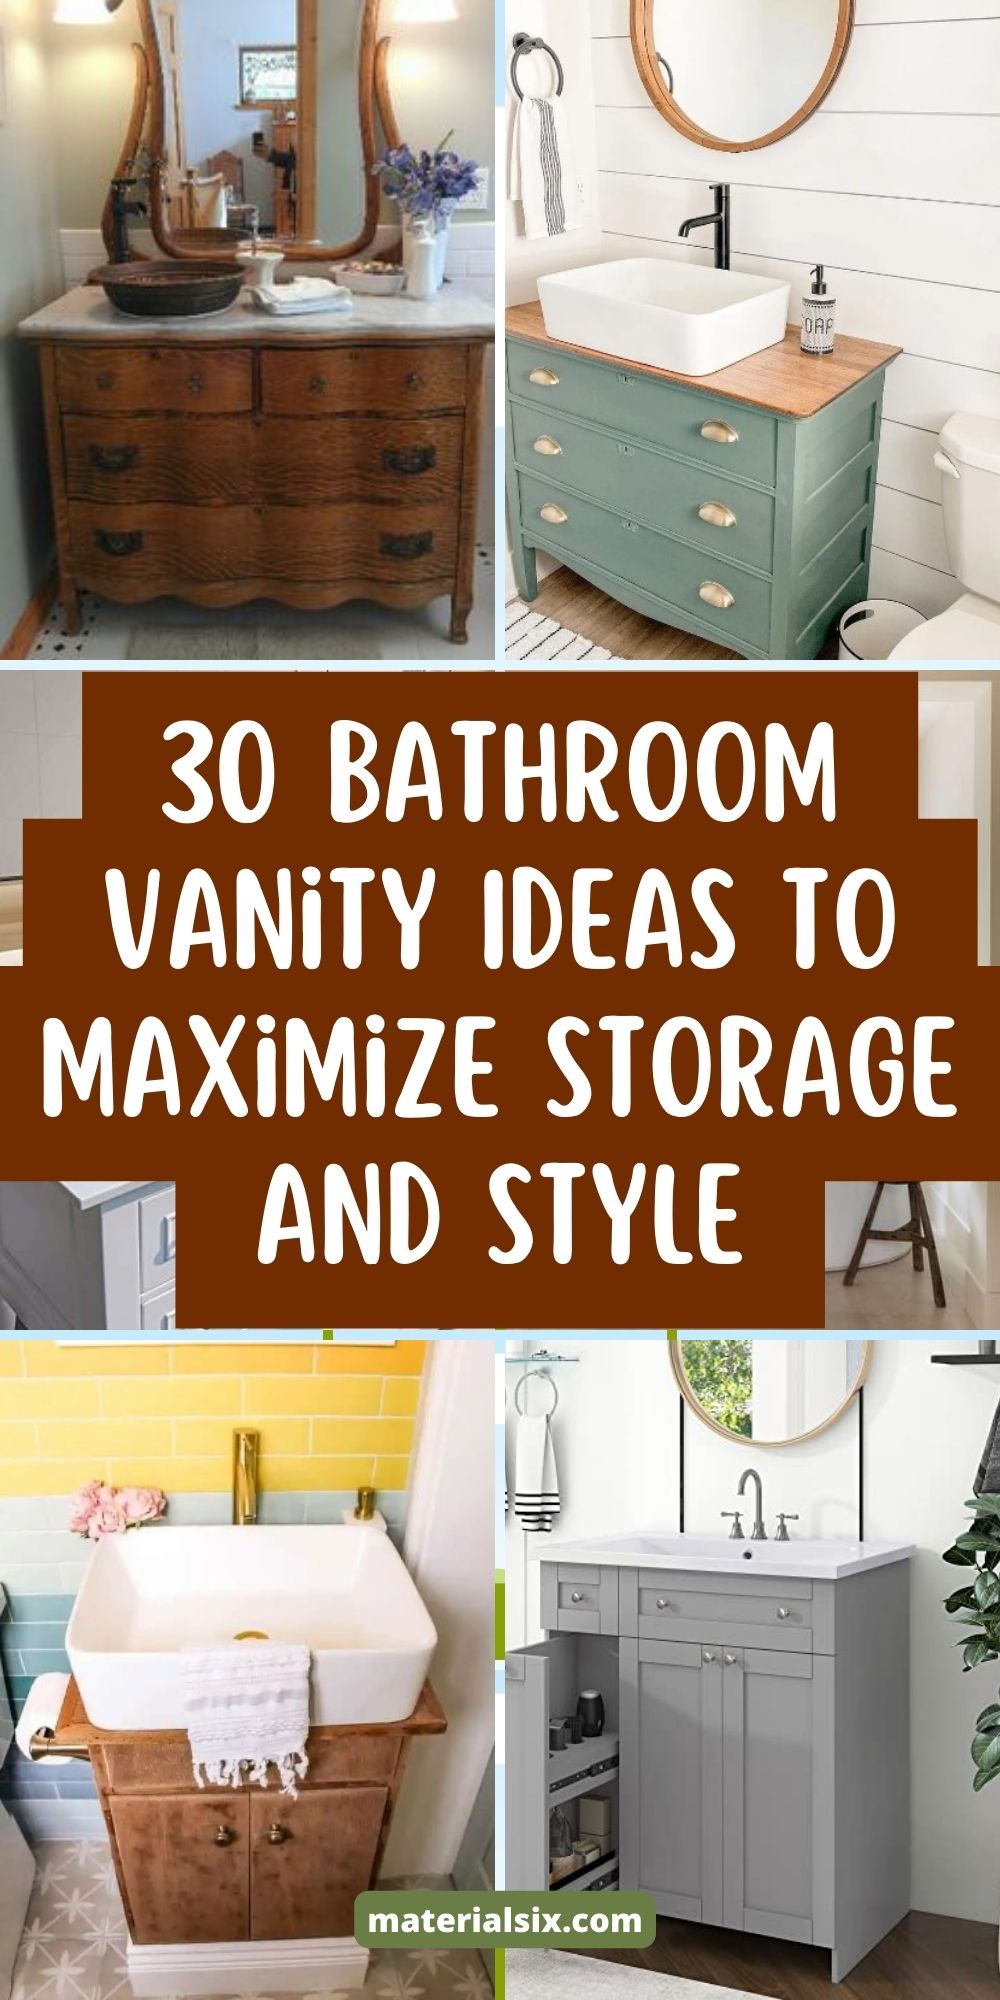 30 Stylish and Functional Bathroom Vanity Ideas